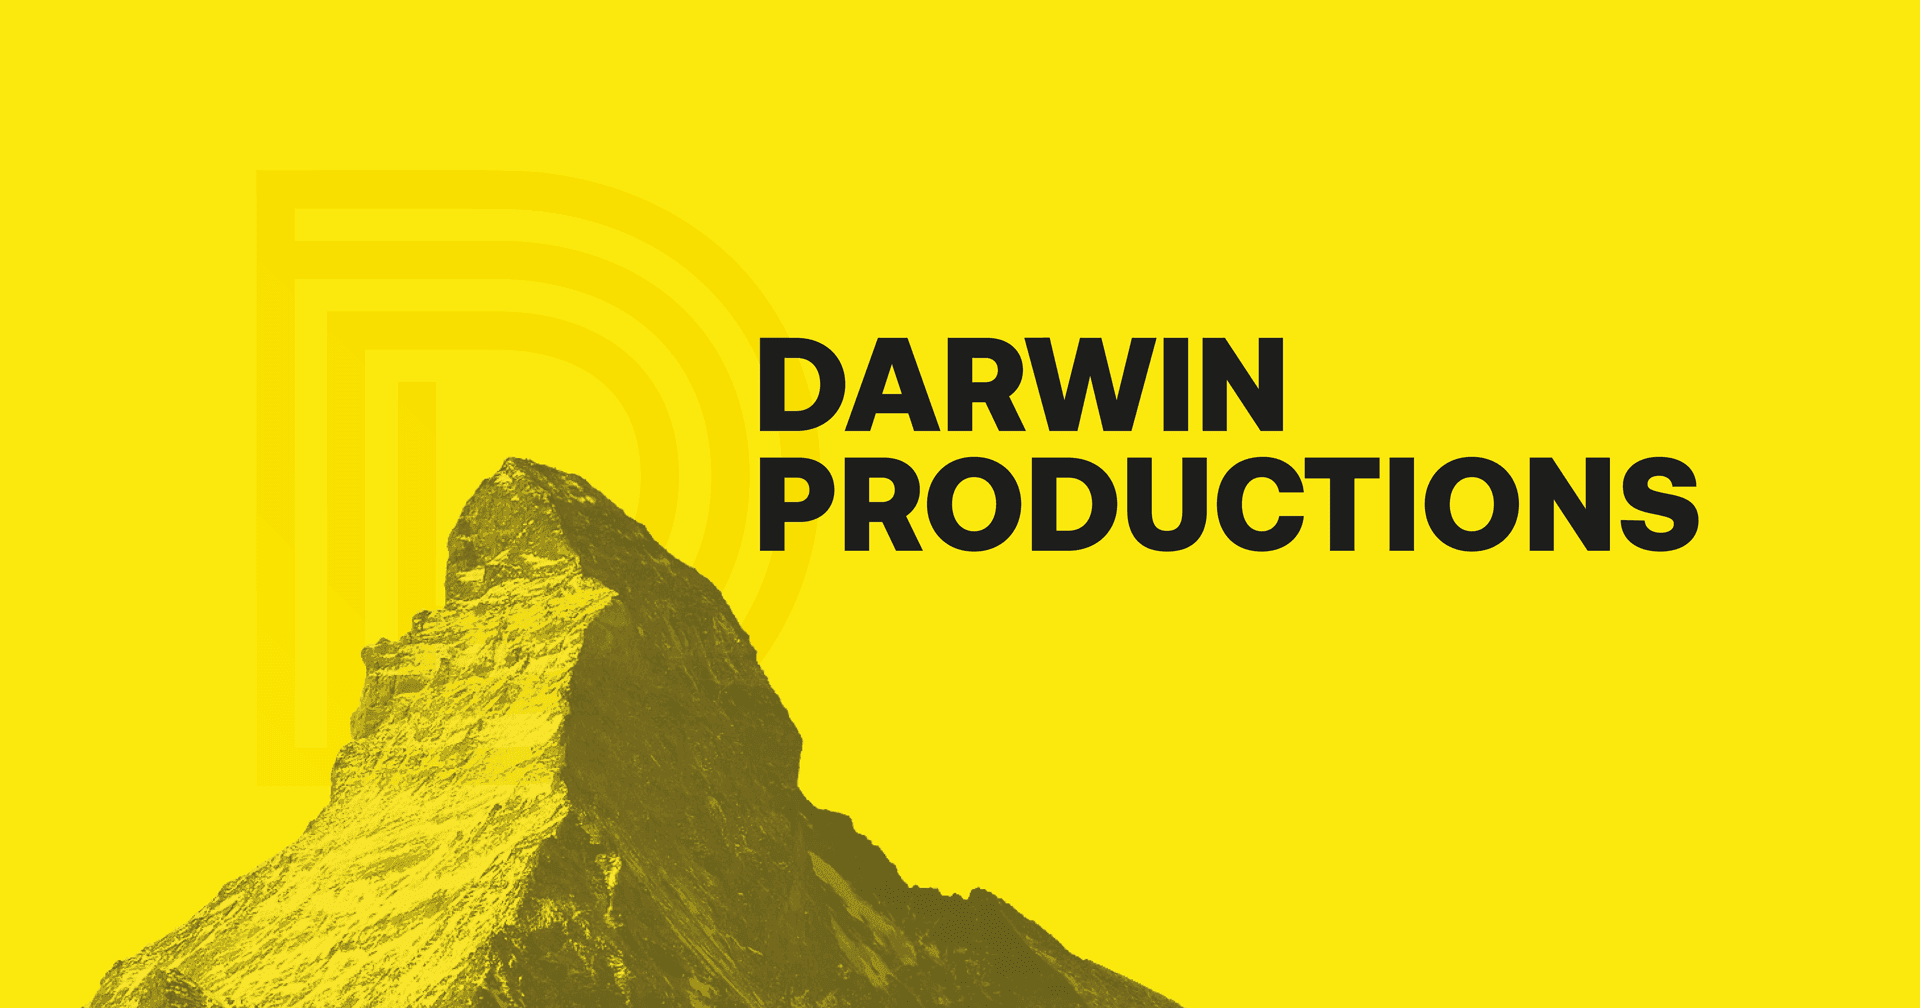 darwin productions logo banner yellow